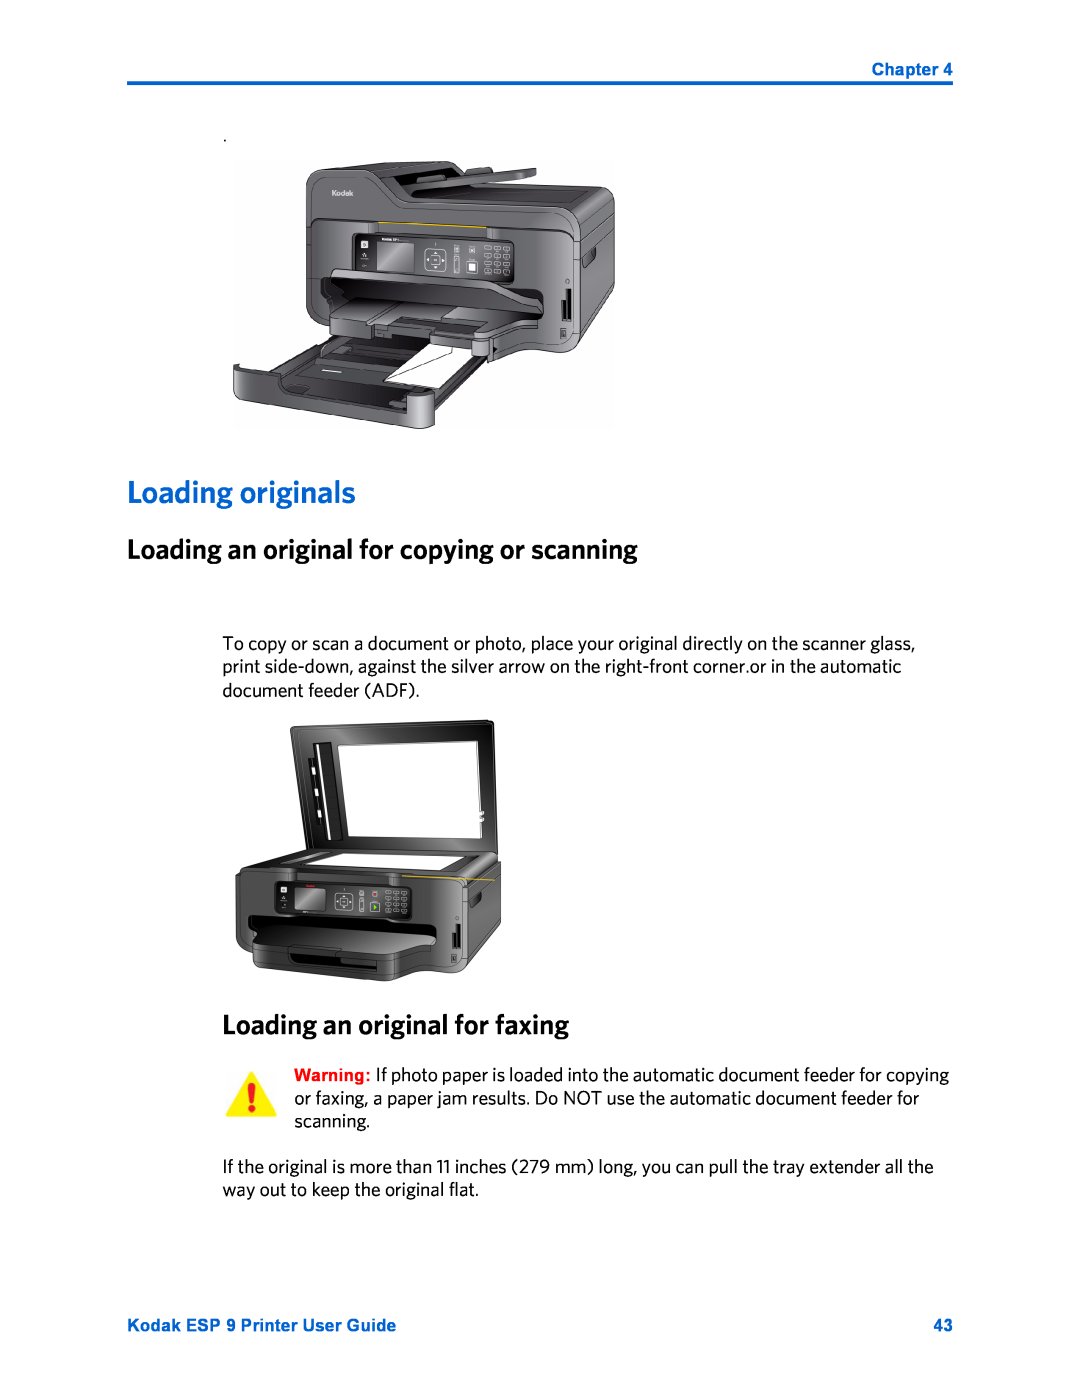 Kodak ESP 9 manual Loading originals, Loading an original for copying or scanning, Loading an original for faxing 